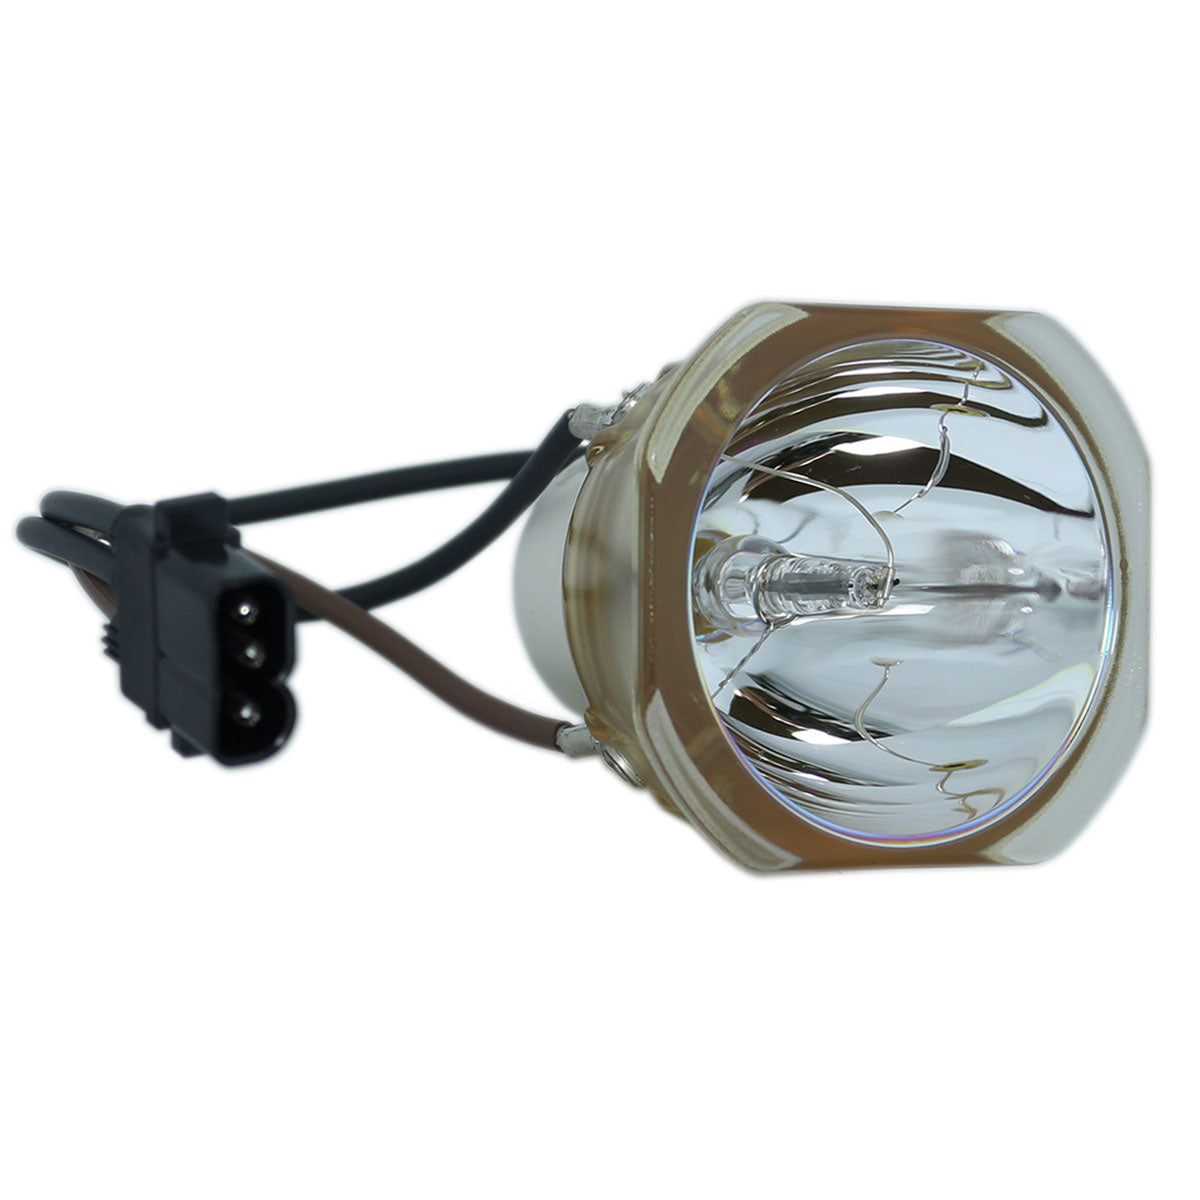 LG AJ-LBX3A Ushio Projector Bare Lamp